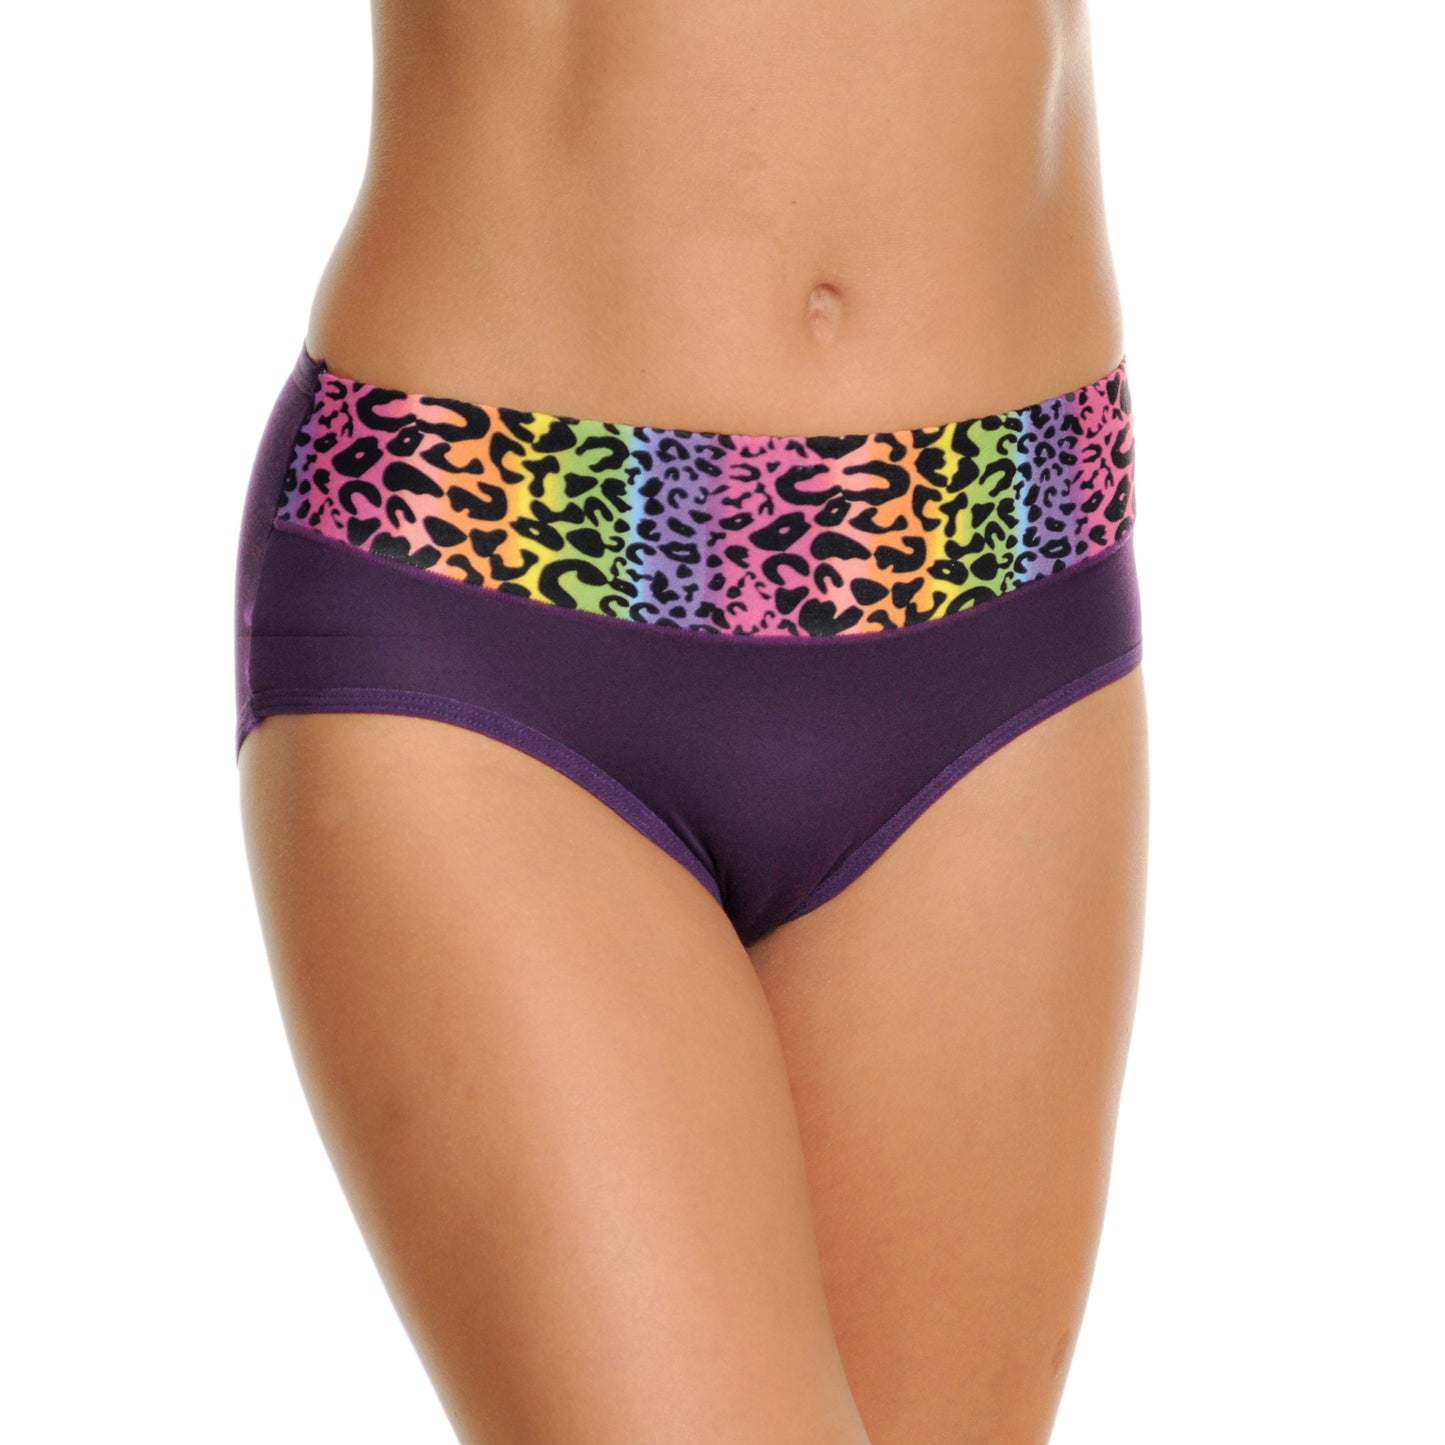 Hiphugger Panties with Rainbow Cheetah Print (6-Pack)